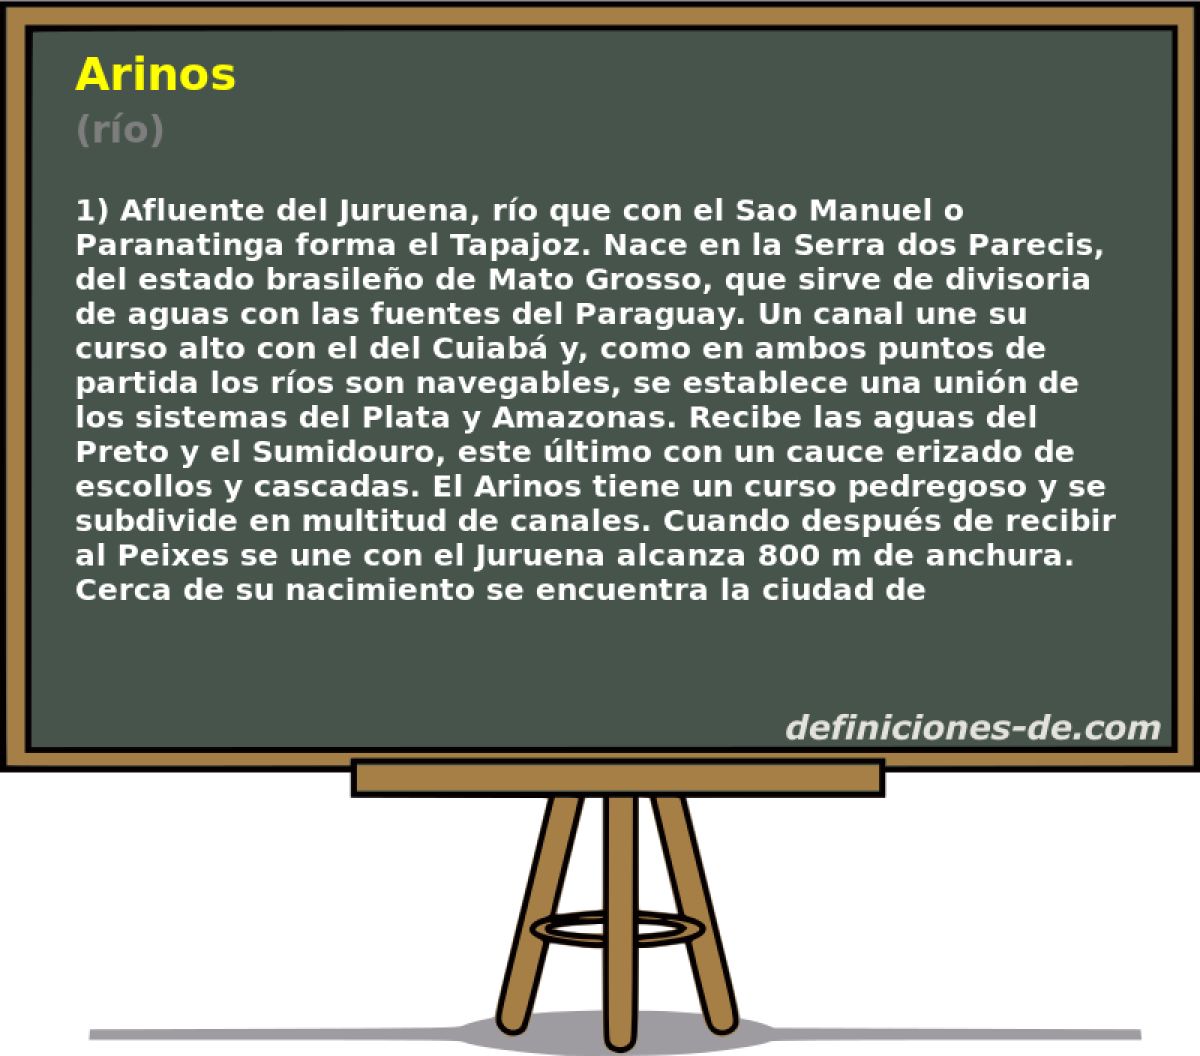 Arinos (ro)